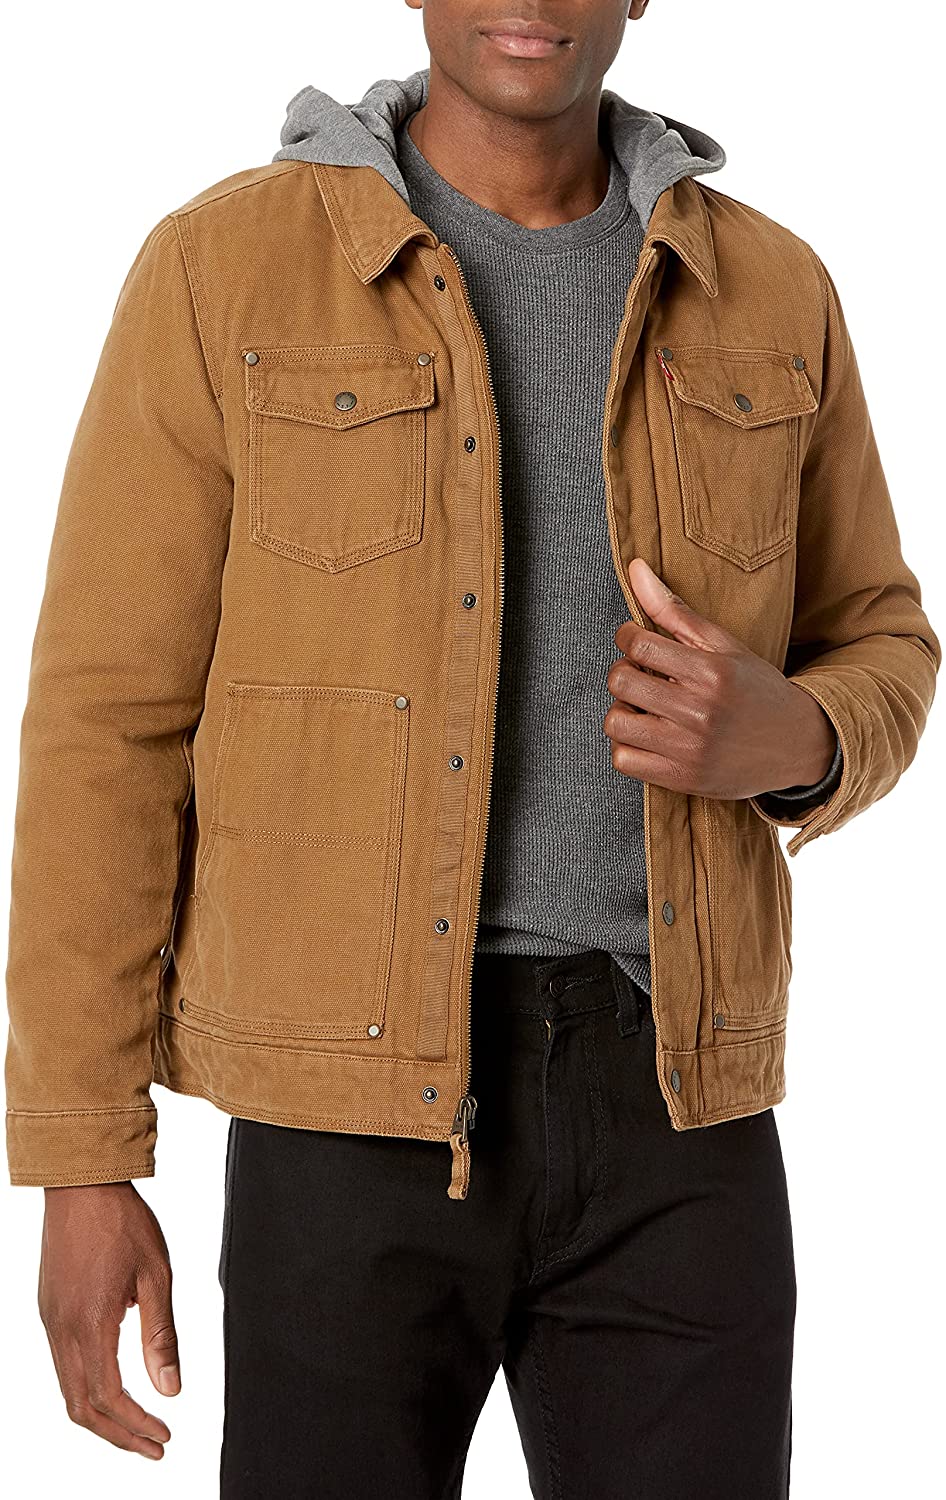 Levi's Men's Cotton Canvas Trucker Jacket with Removable Hood | eBay